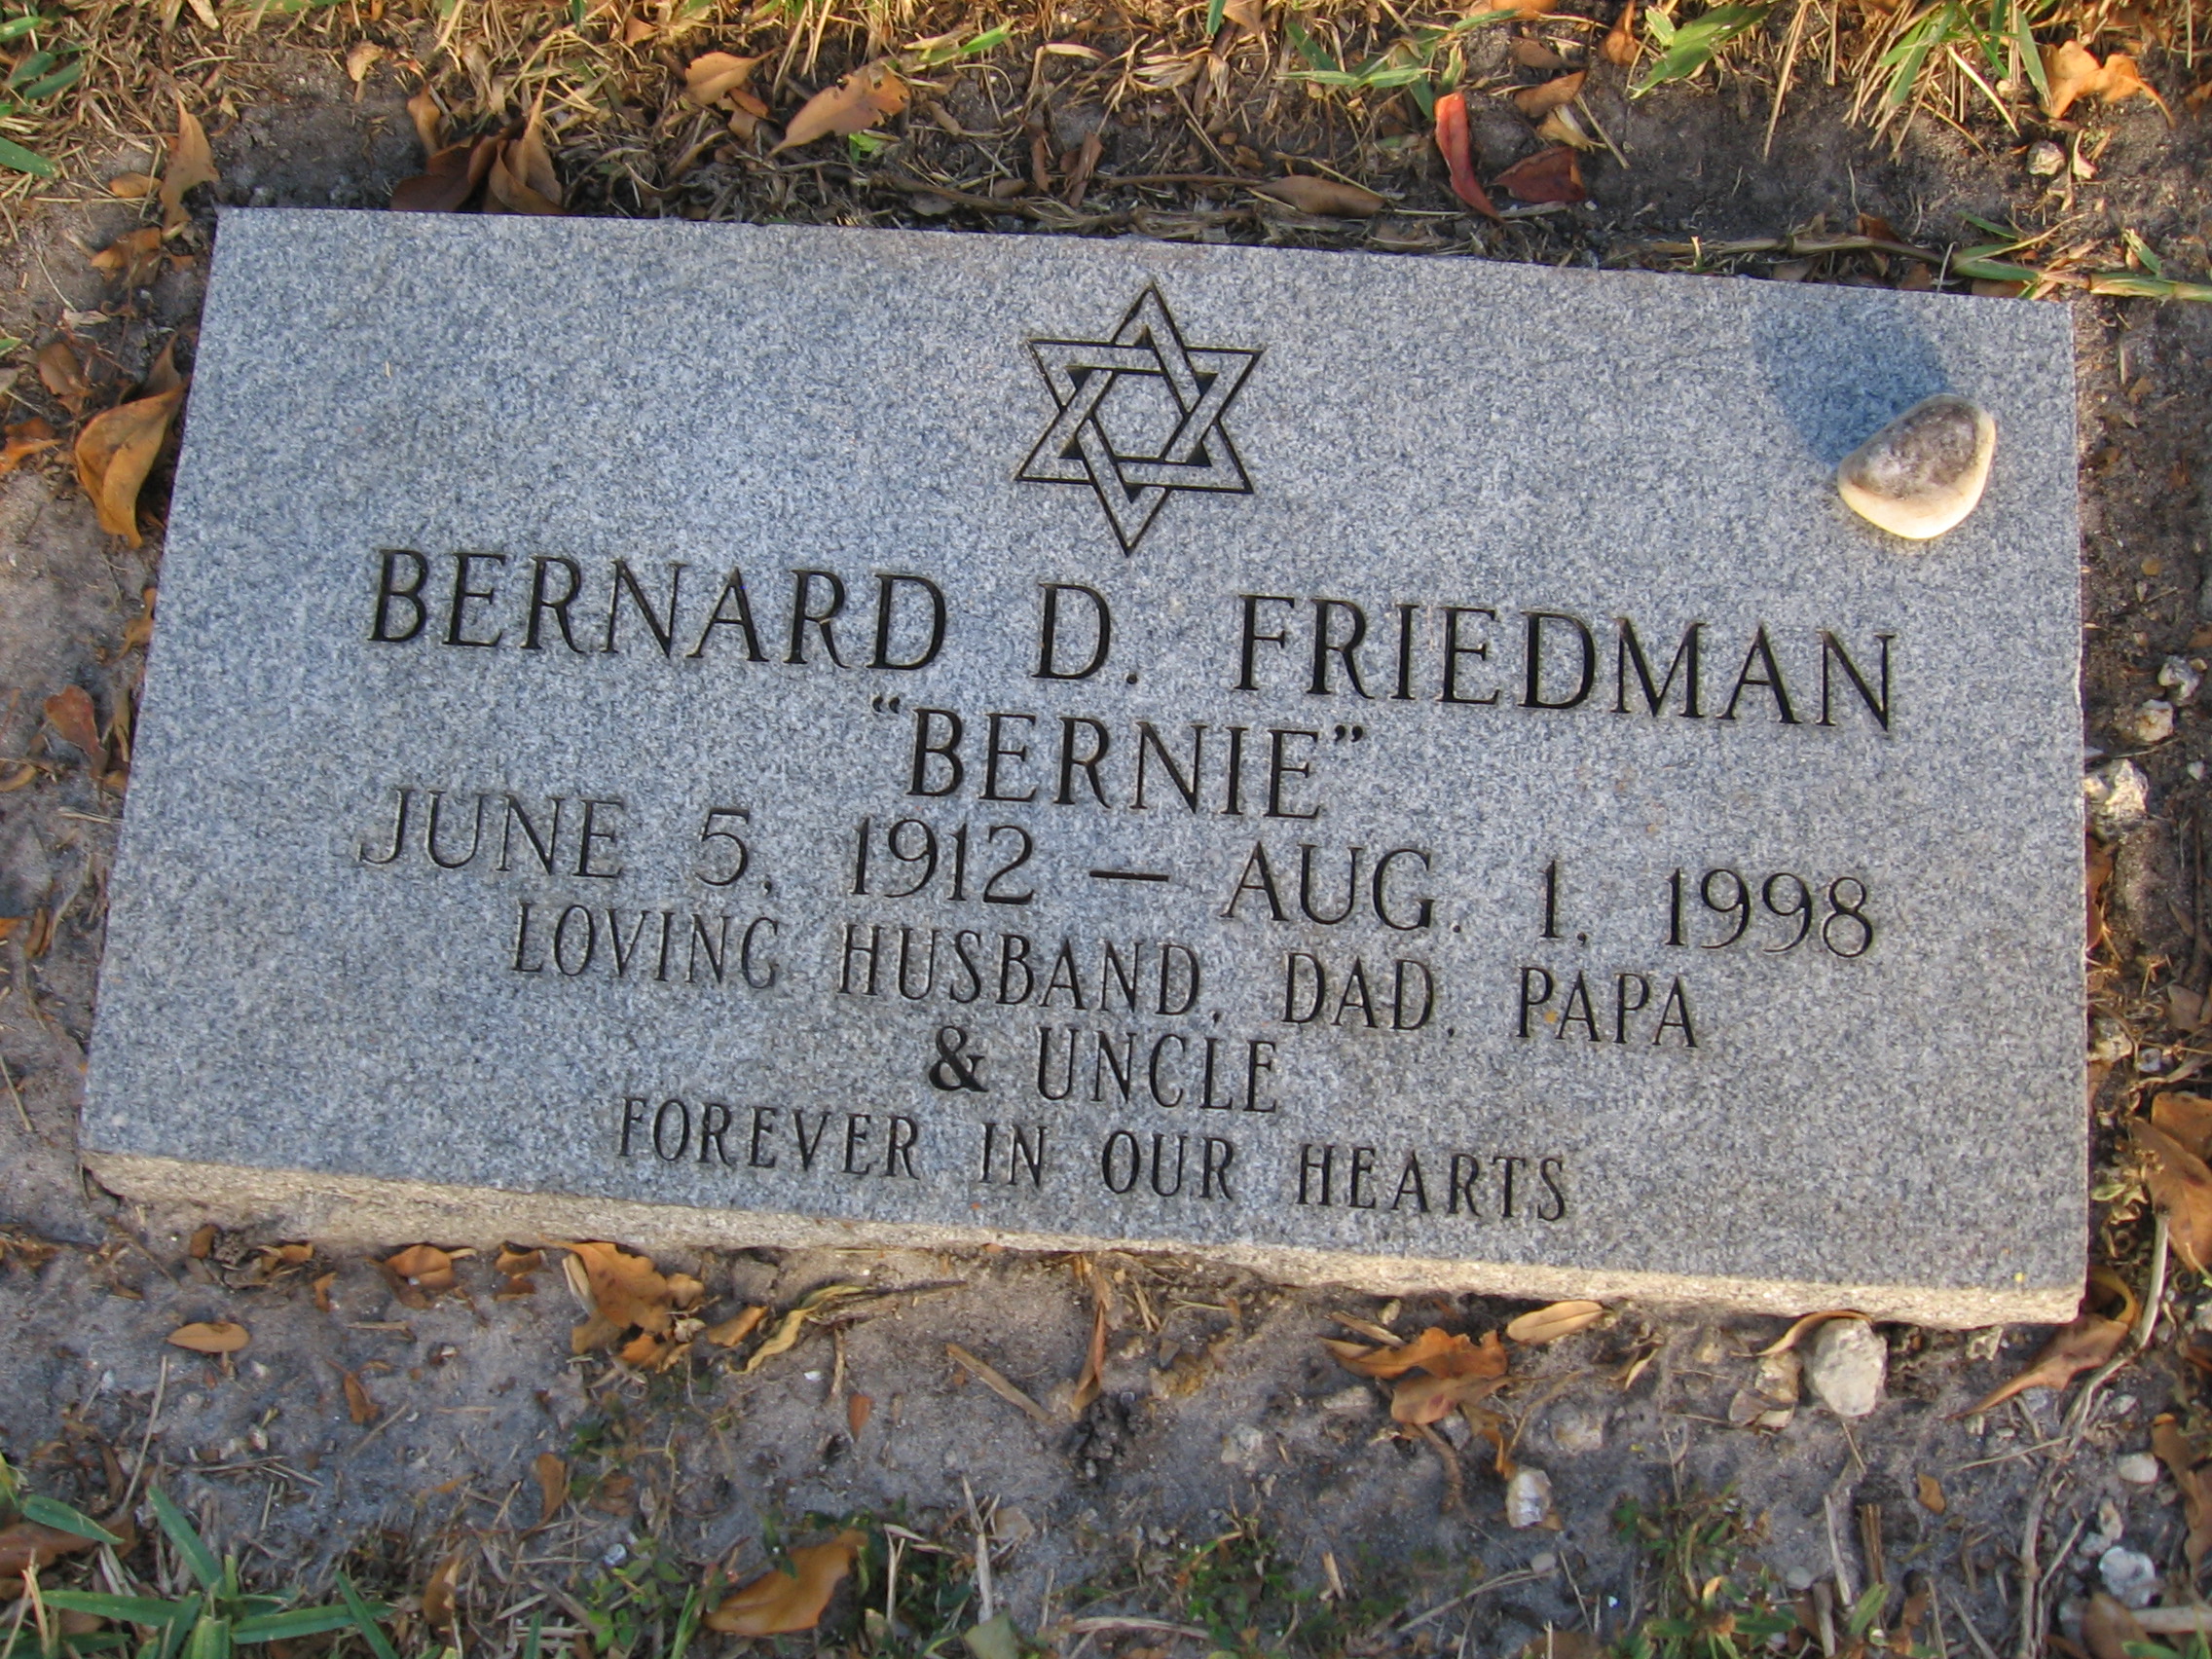 Bernard D "Bernie" Friedman